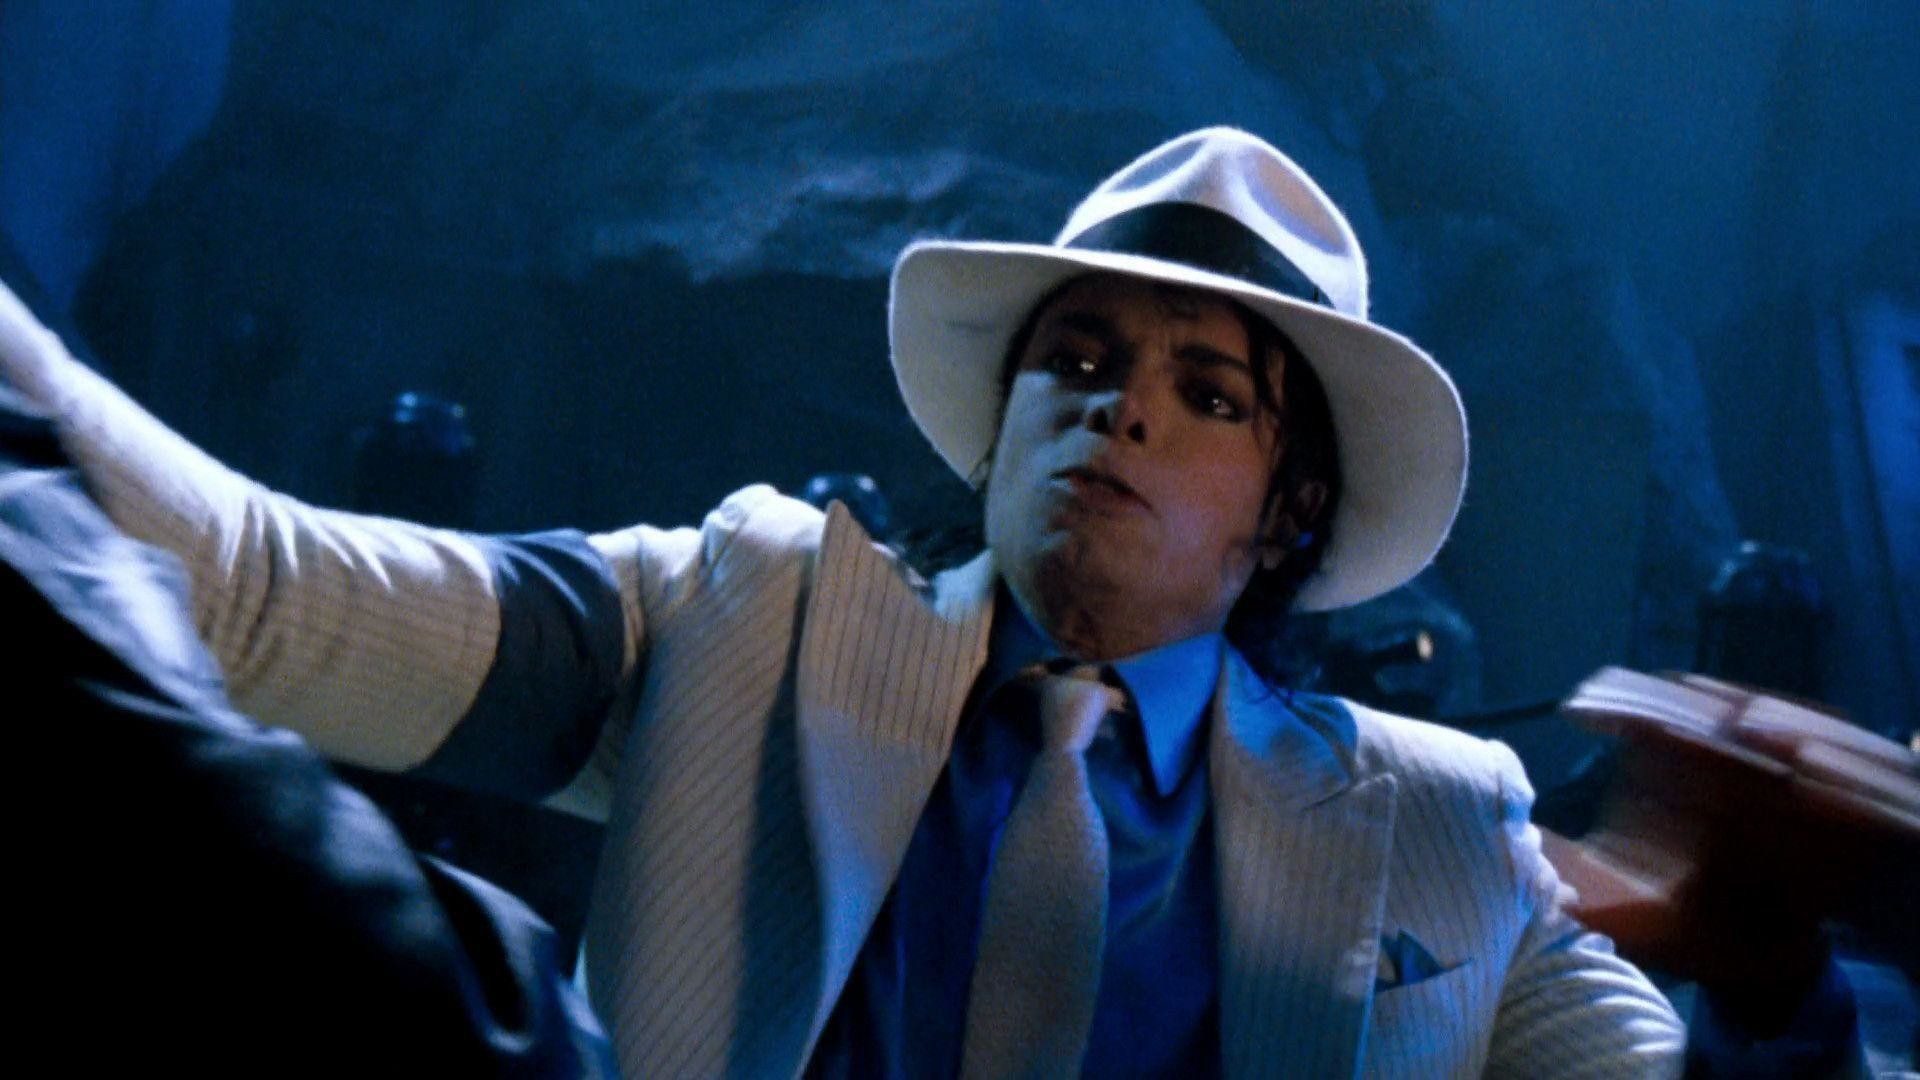 1920x1080 I LUV Smooth Criminal ::CrissloveMJ:: - Michael Jackson Photo .